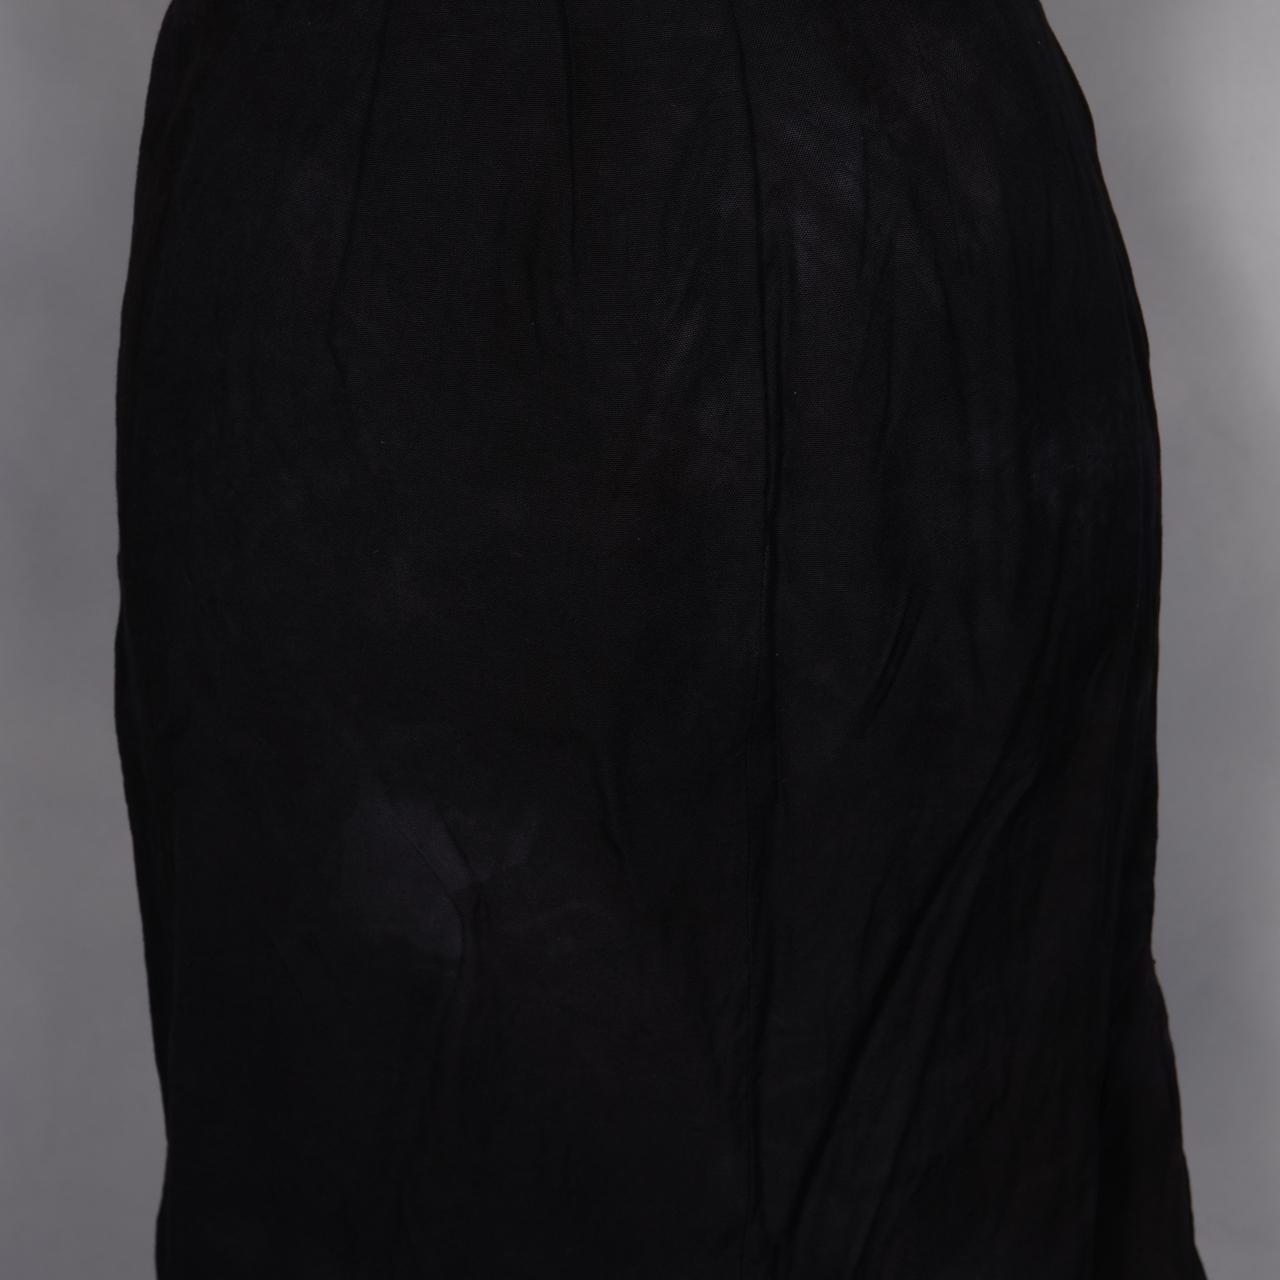 Vintage Christian Dior Woman's skirt. The skirt is... - Depop